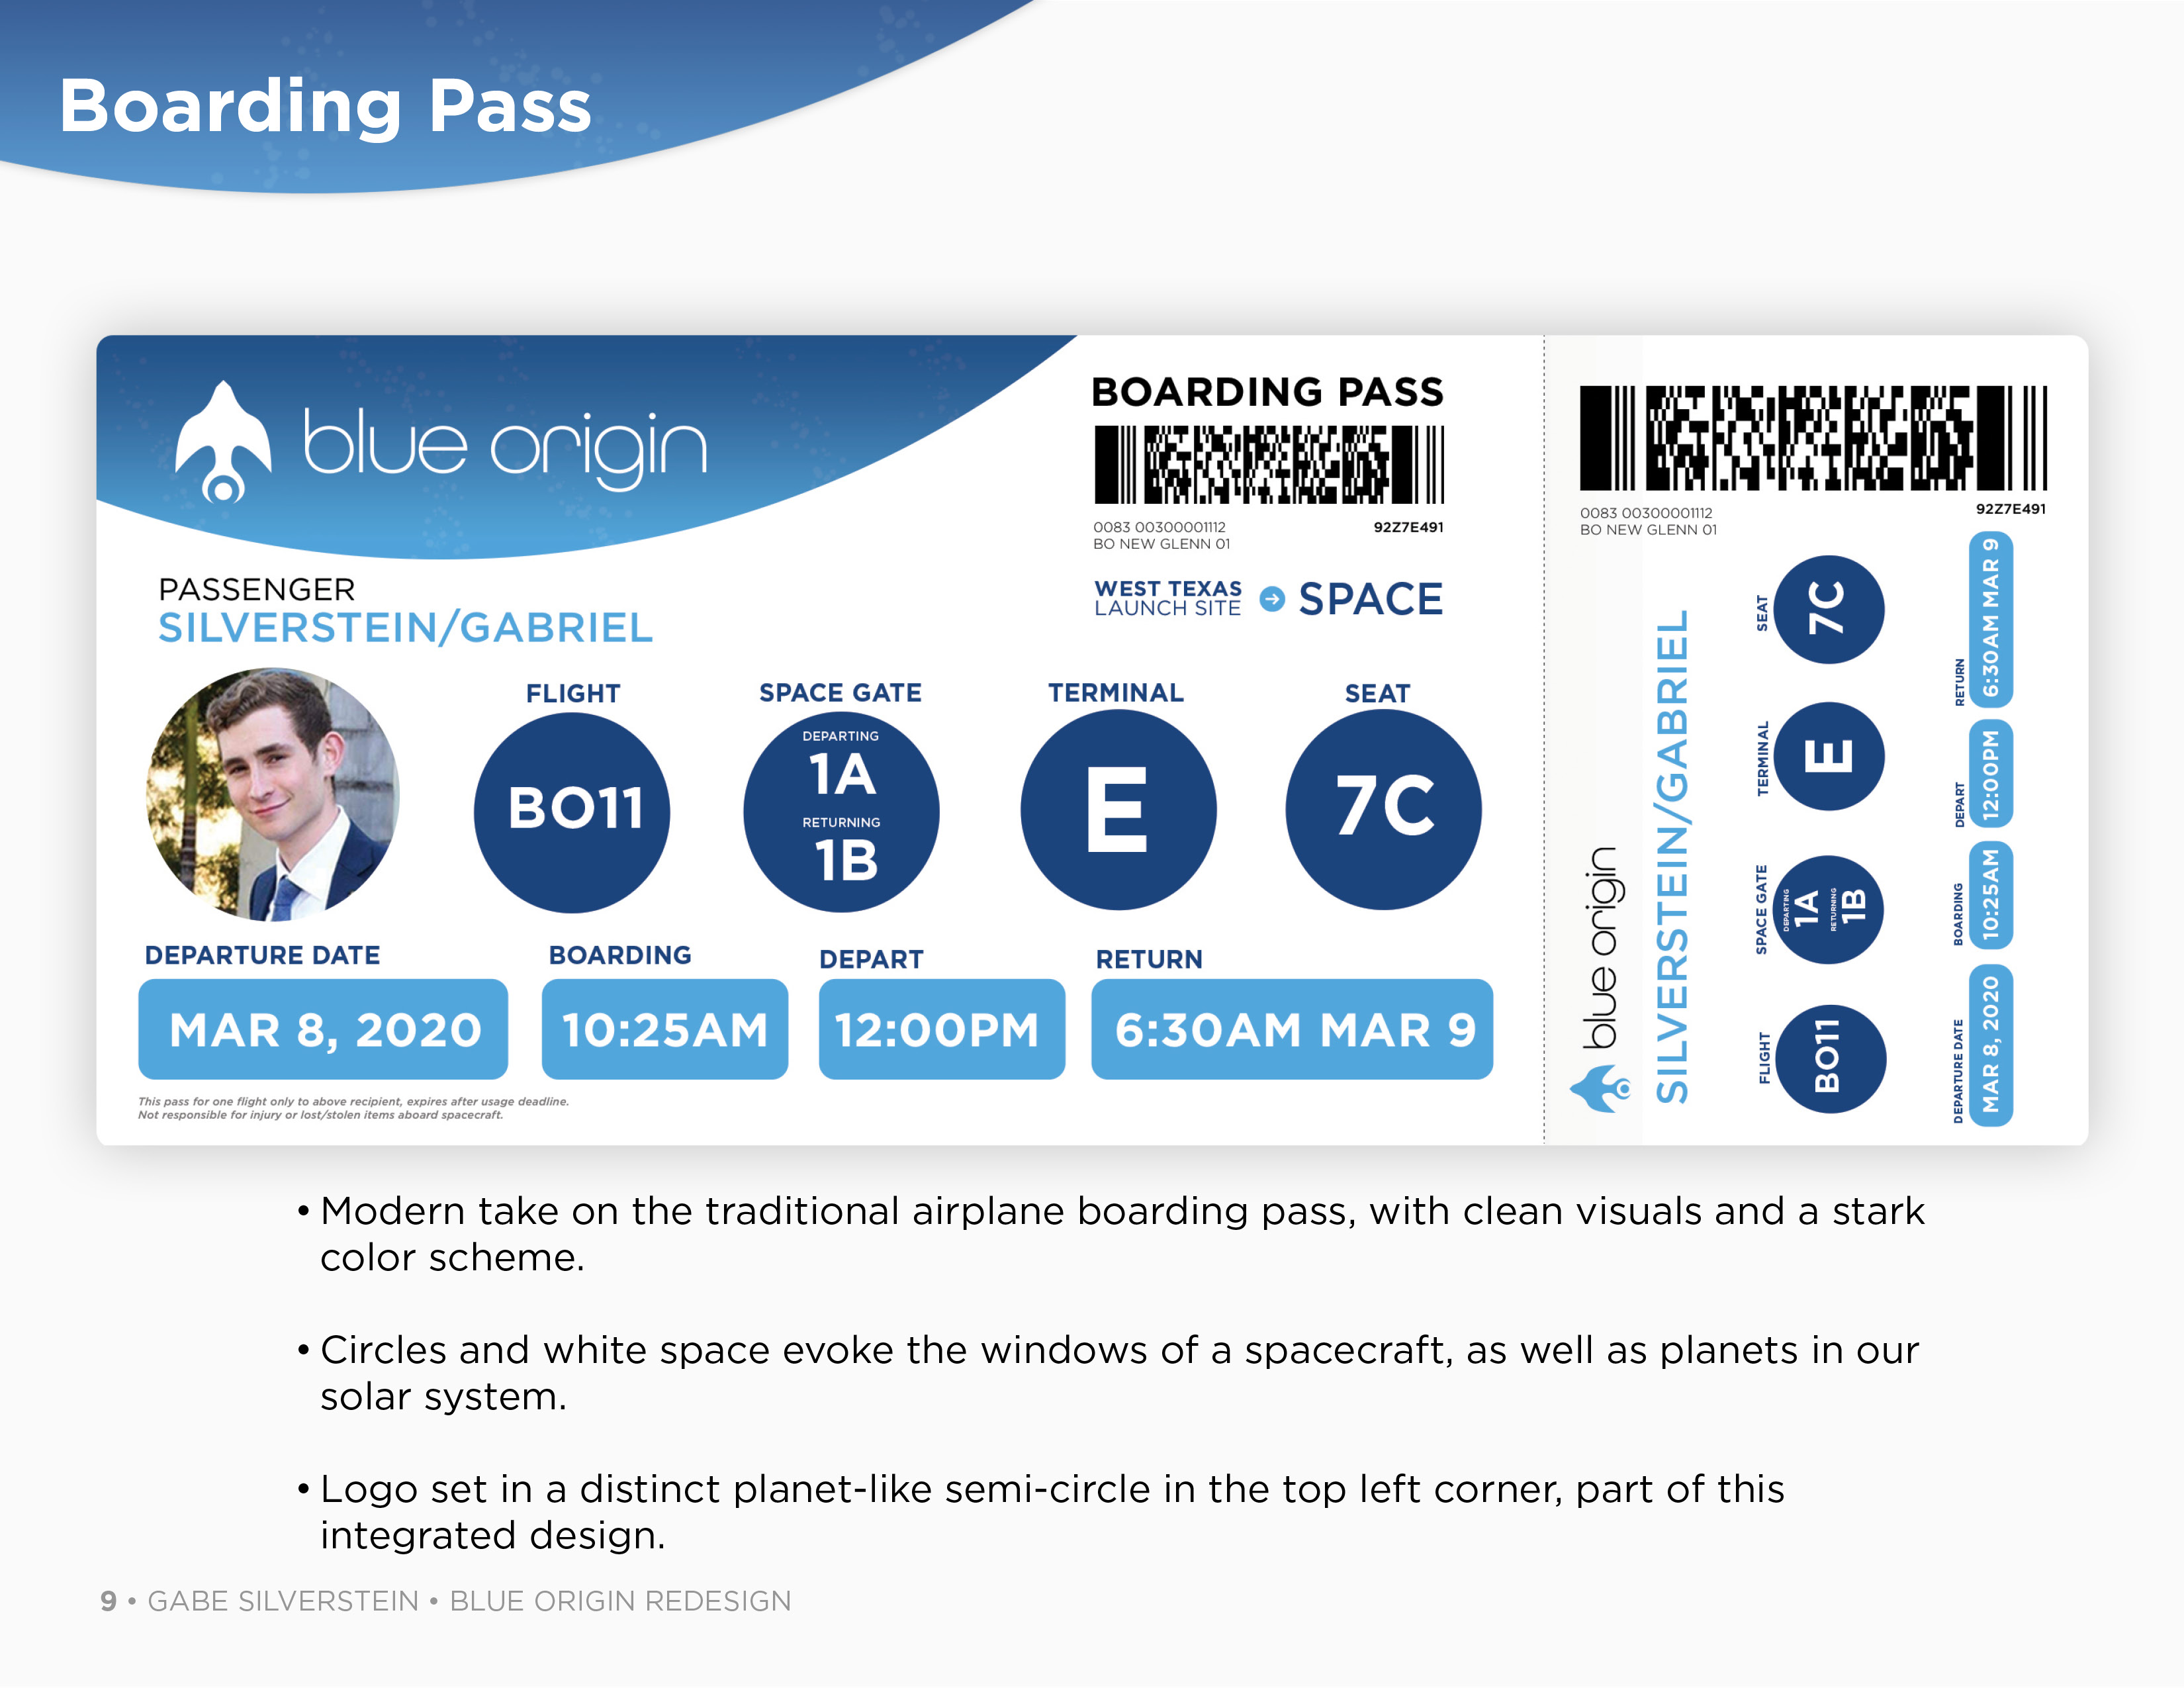 Blue Origin: Boarding Pass